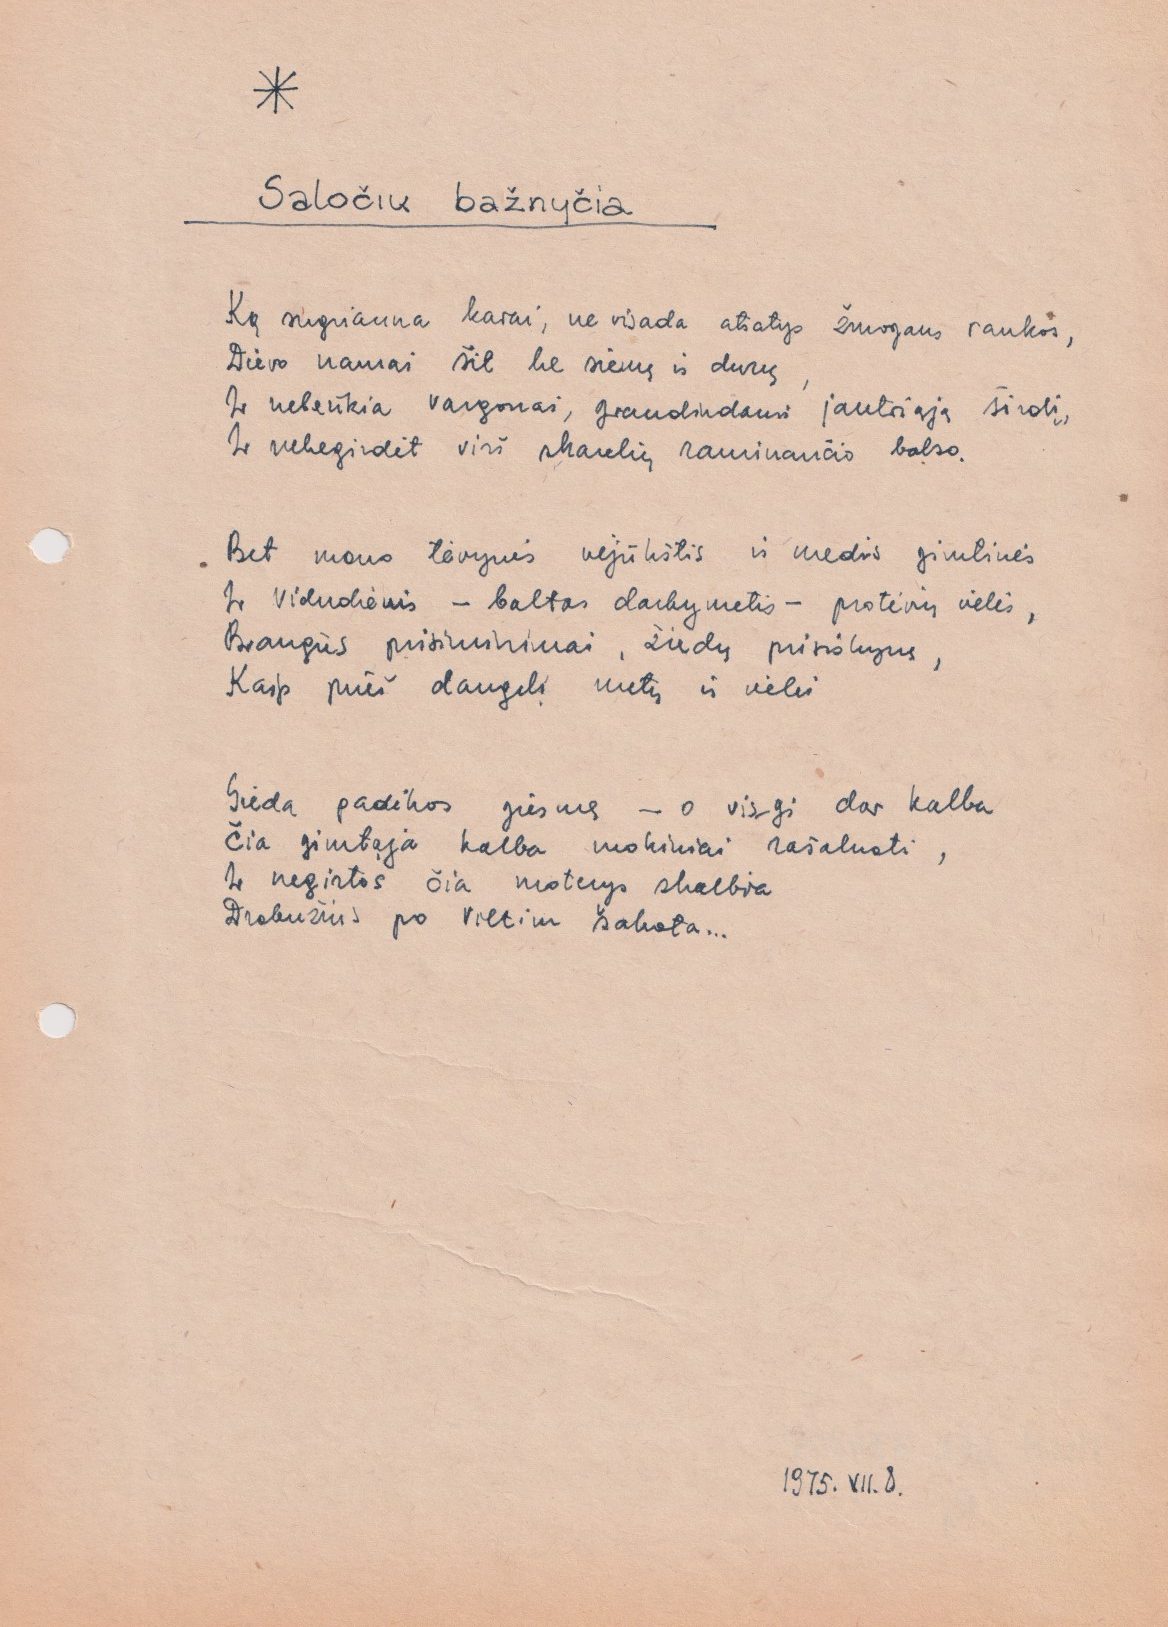 H. A. Čigriejaus eilėraščio „Saločių bažnyčia“ rankraštis. 1975-07-08. MLLM 134705